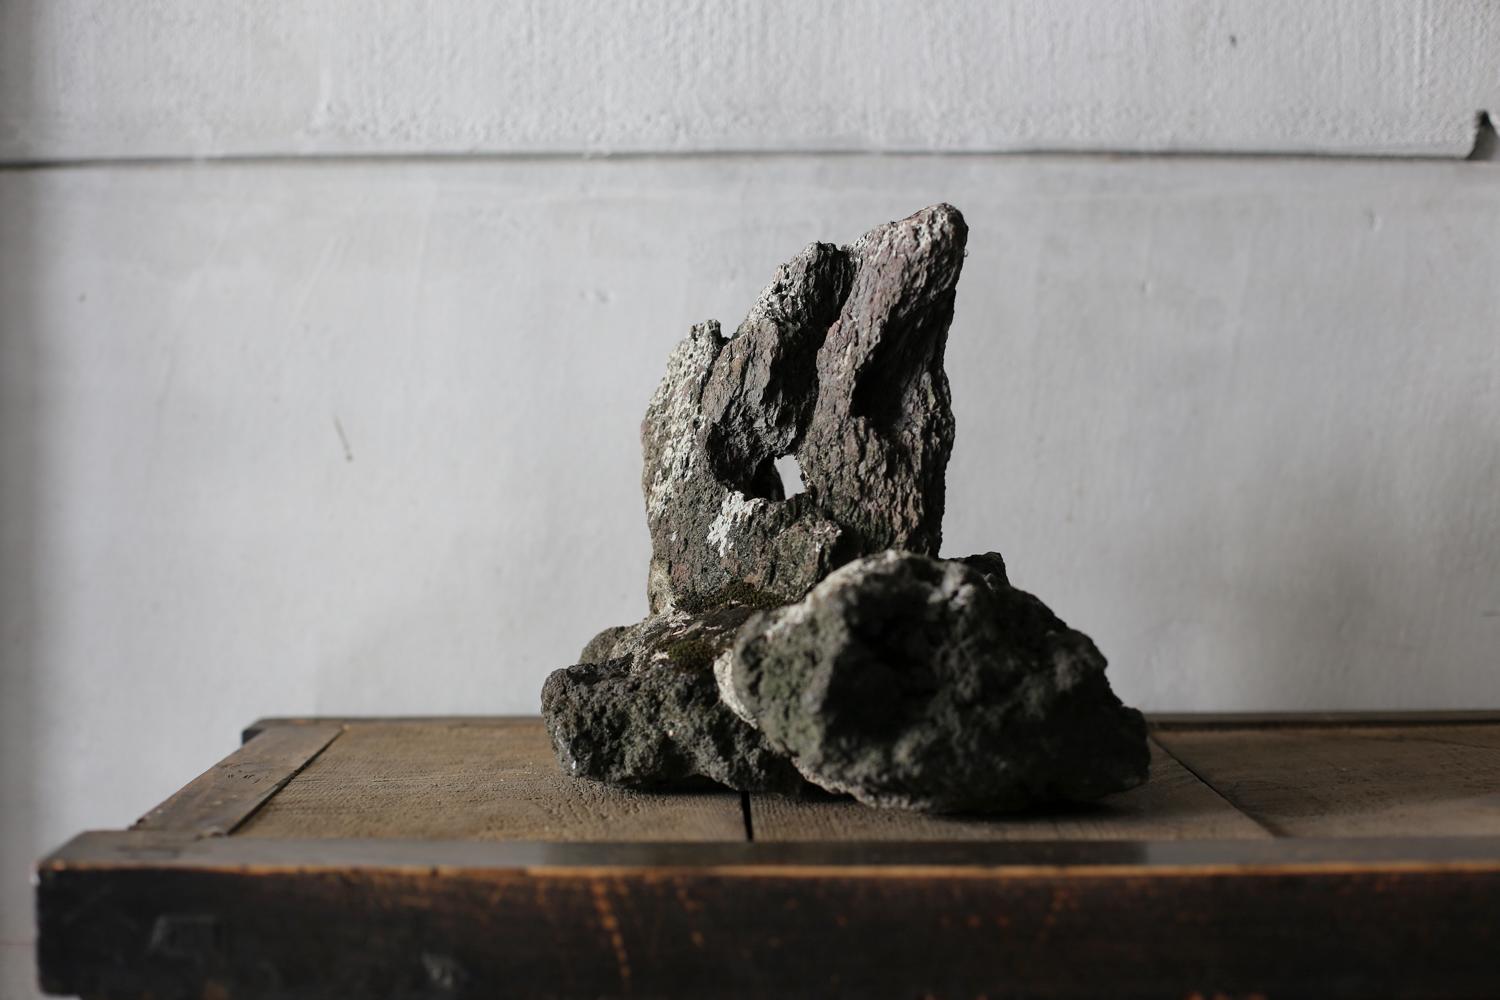 Japonisme Japanese Stone Object with a hole